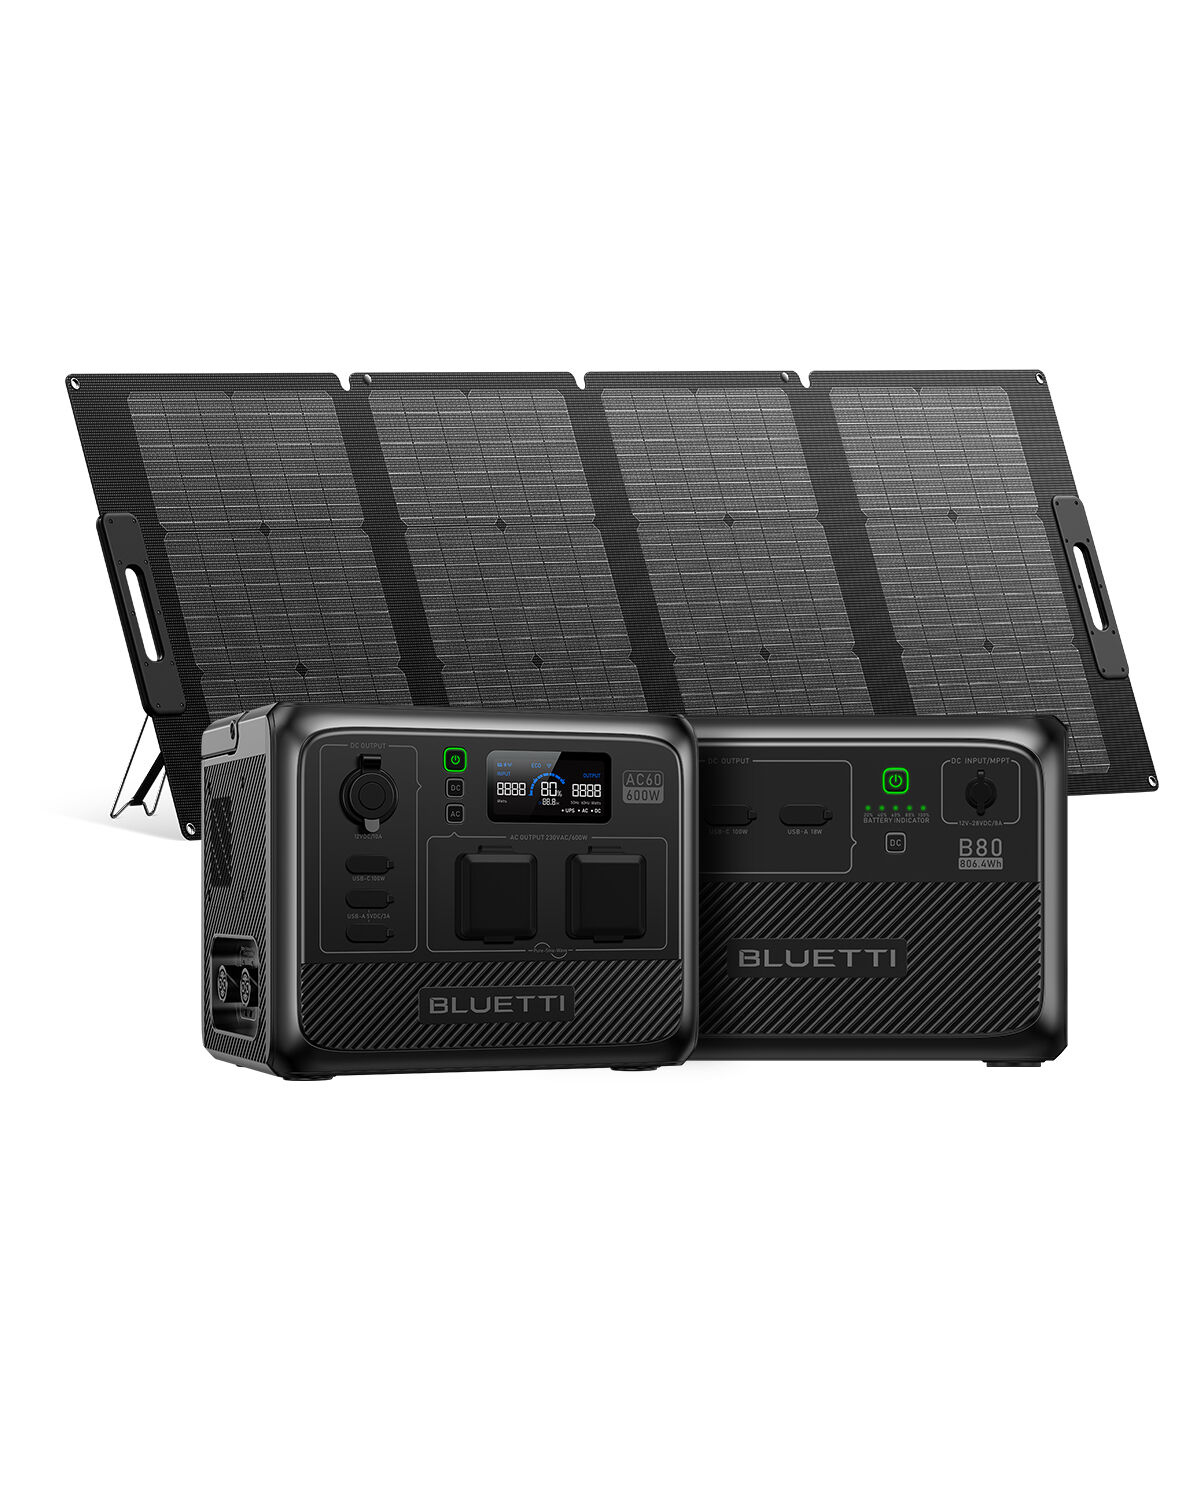 BLUETTI BLUETTI Portable Power Station AC60+B80 with PV120S Solar panel